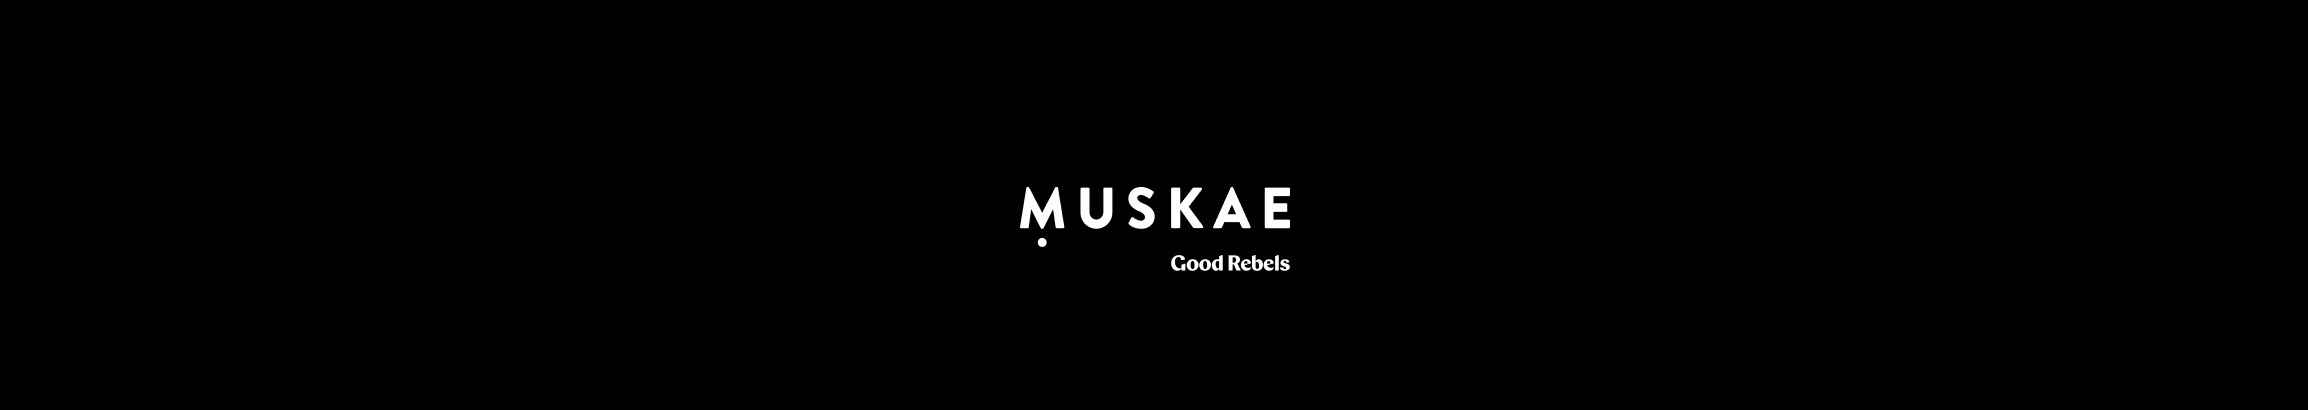 Muskae Design's profile banner